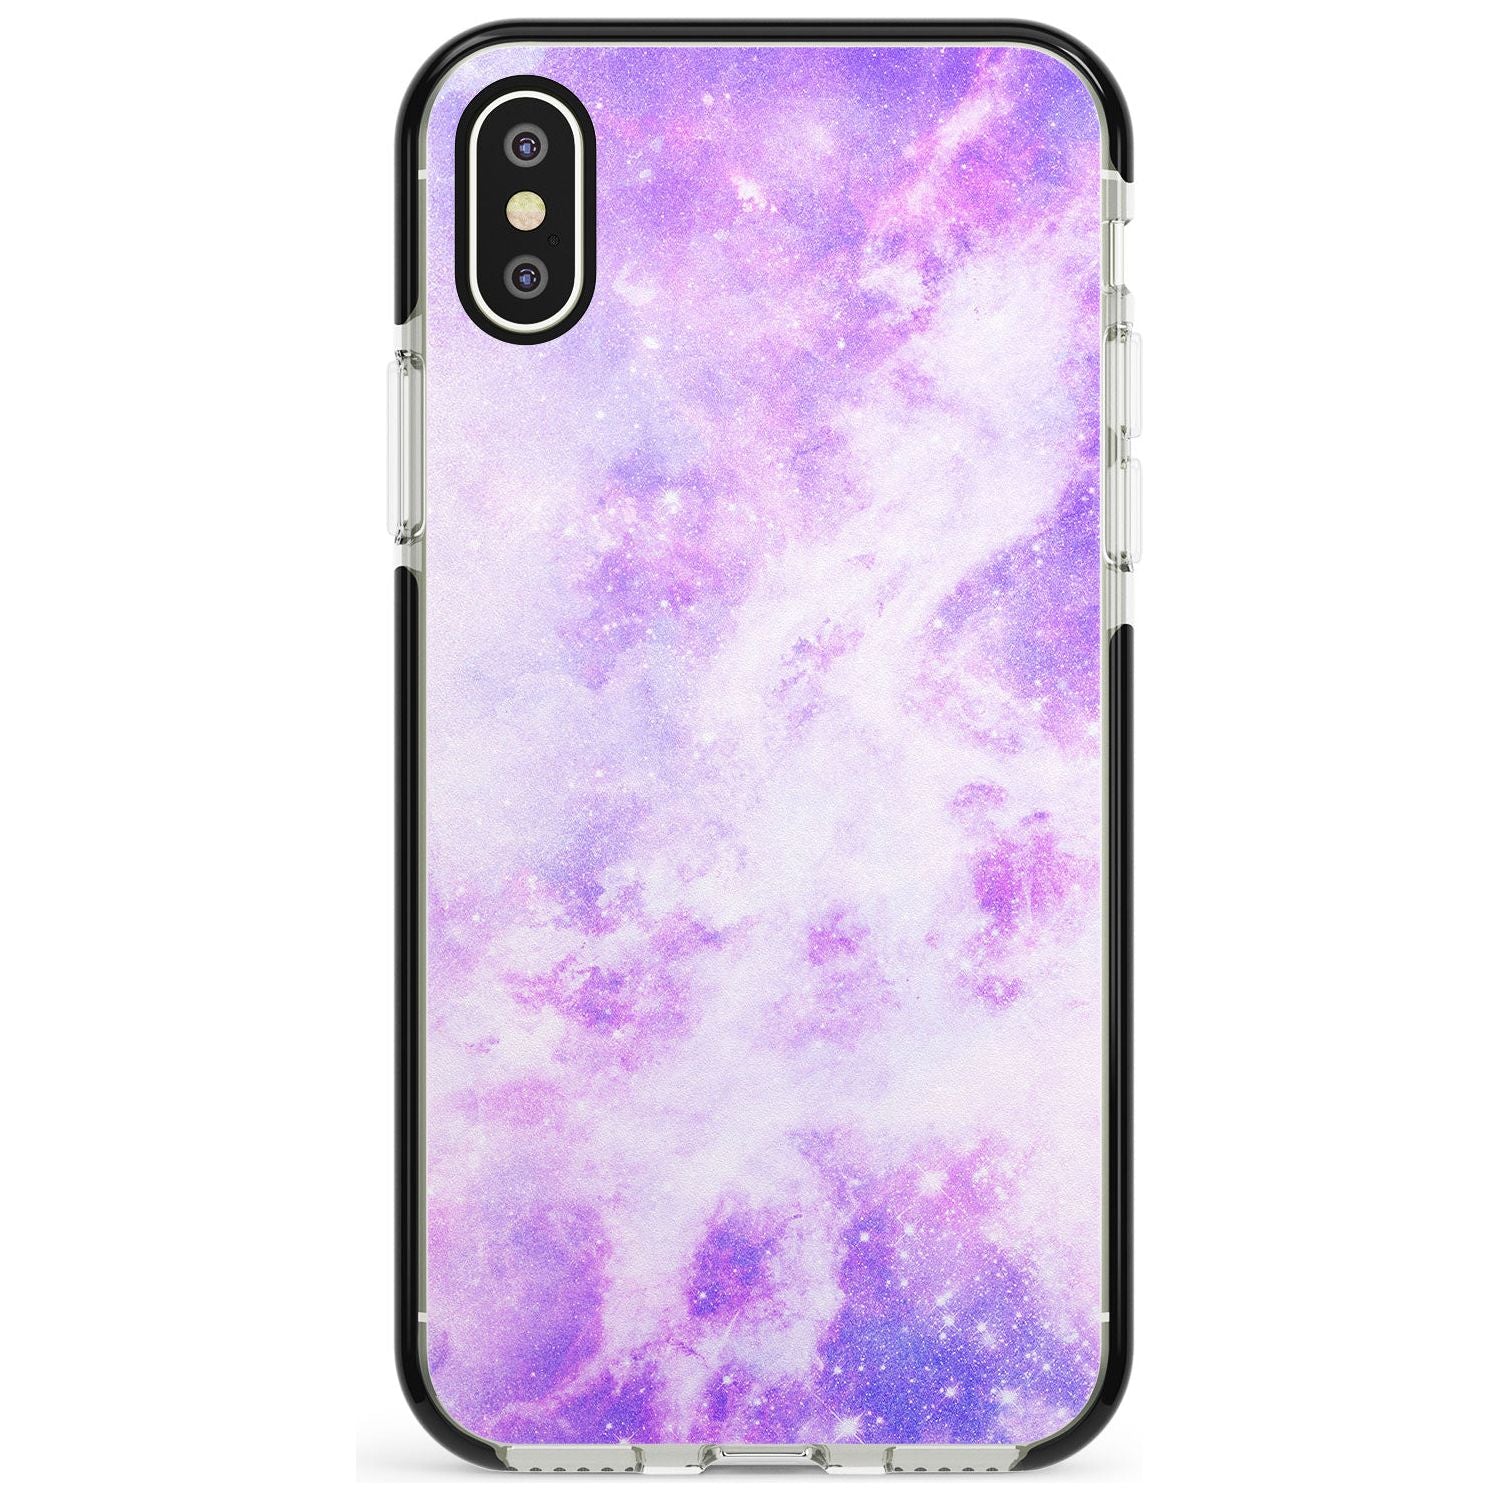 Purple Galaxy Pattern Design Black Impact Phone Case for iPhone X XS Max XR